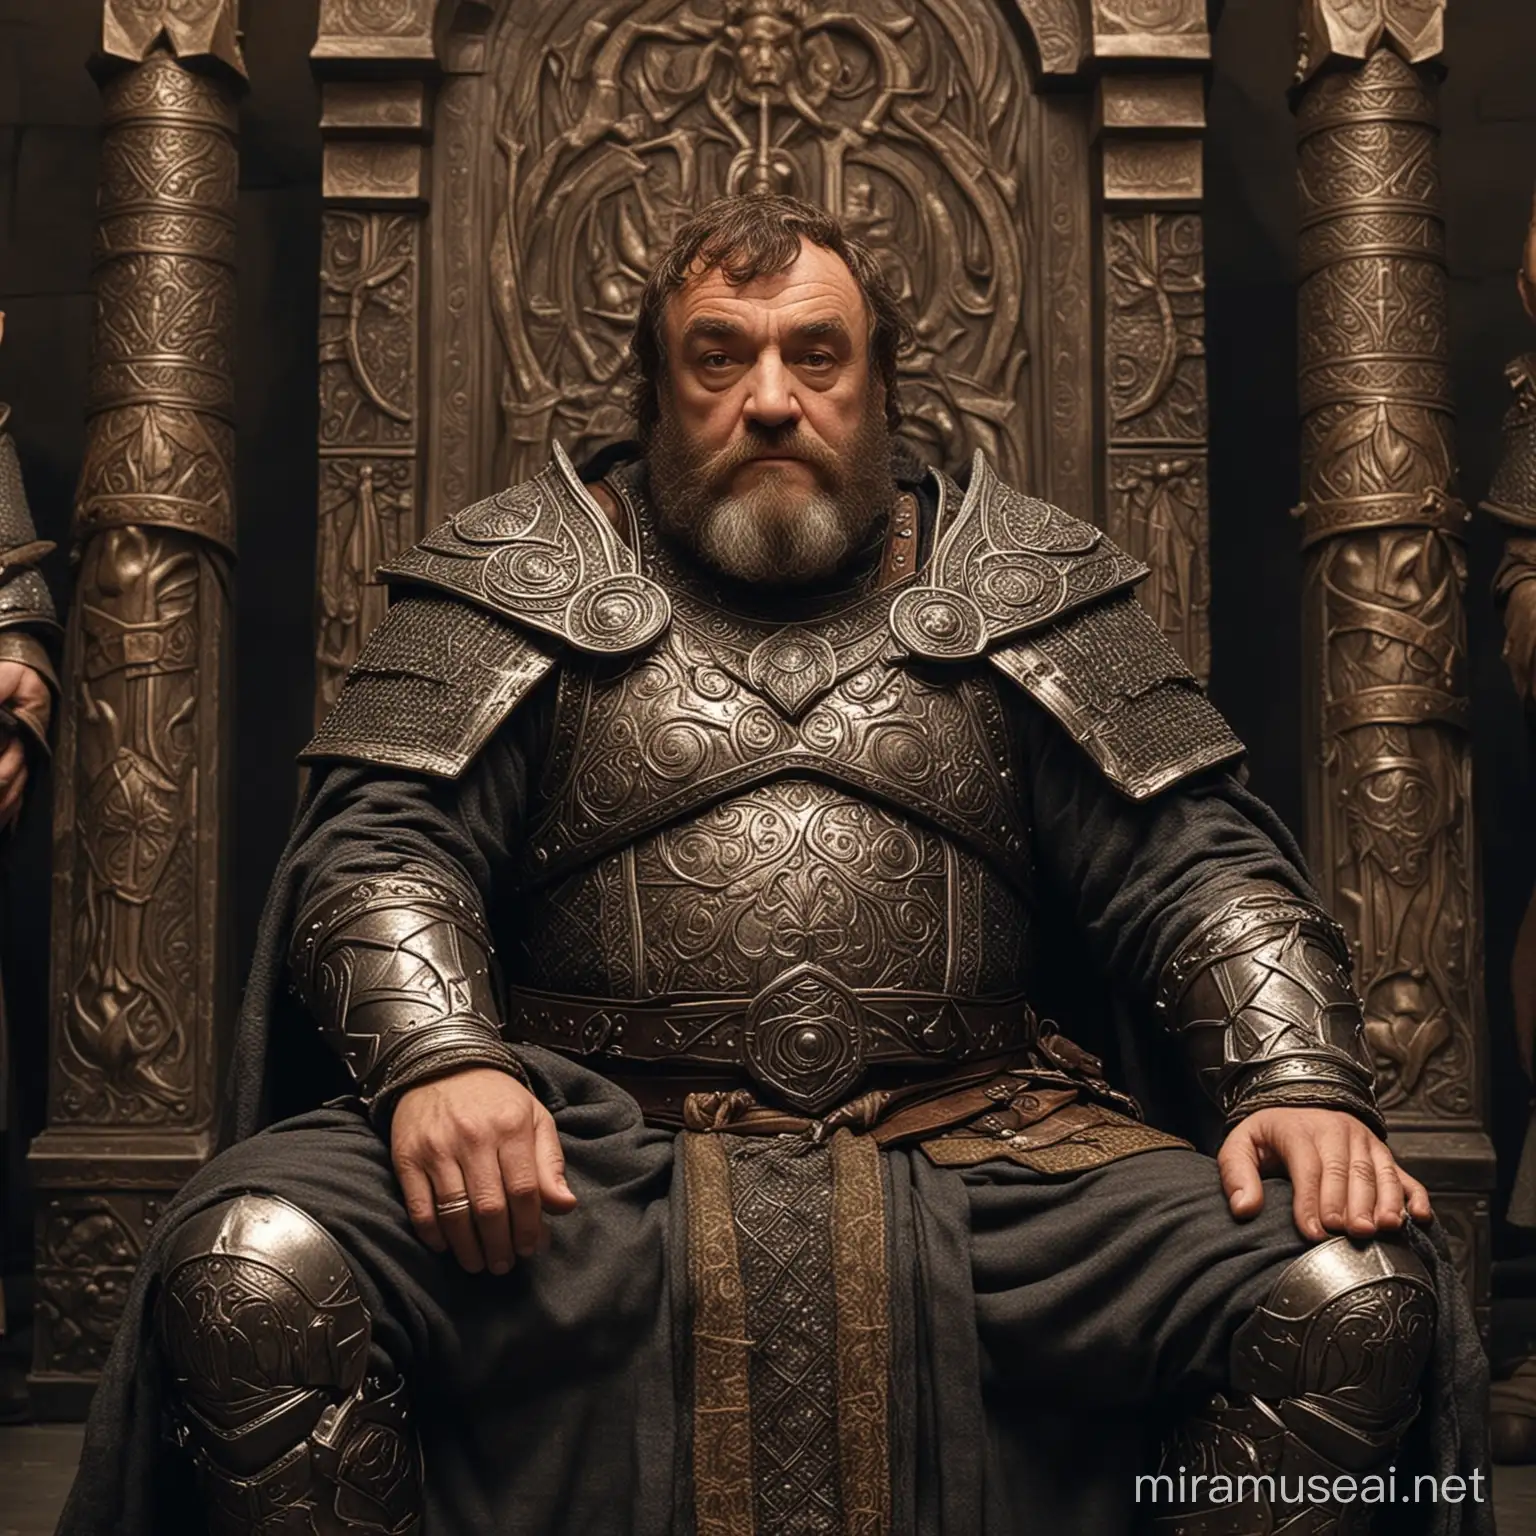 John RhysDavies as Dwarven King in Majestic Throne Room Armor Portrait